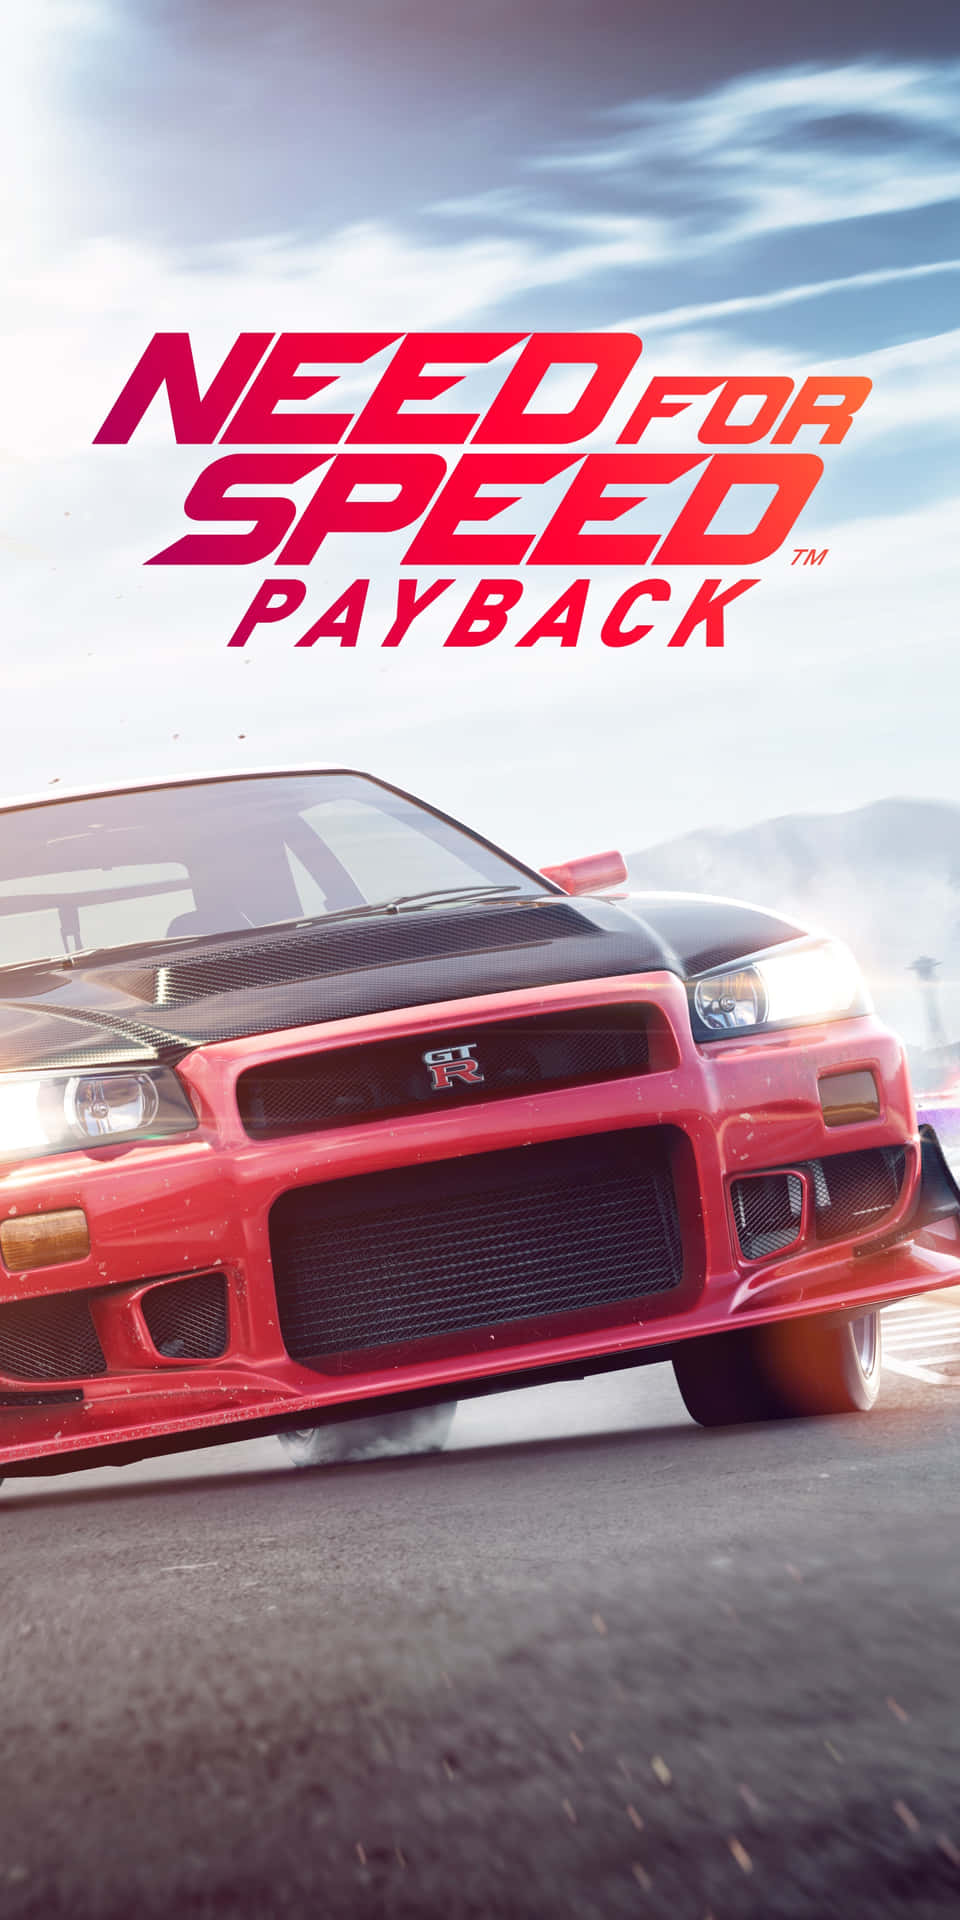 Pixel3 Need For Speed Payback Bakgrund Röd Bil.